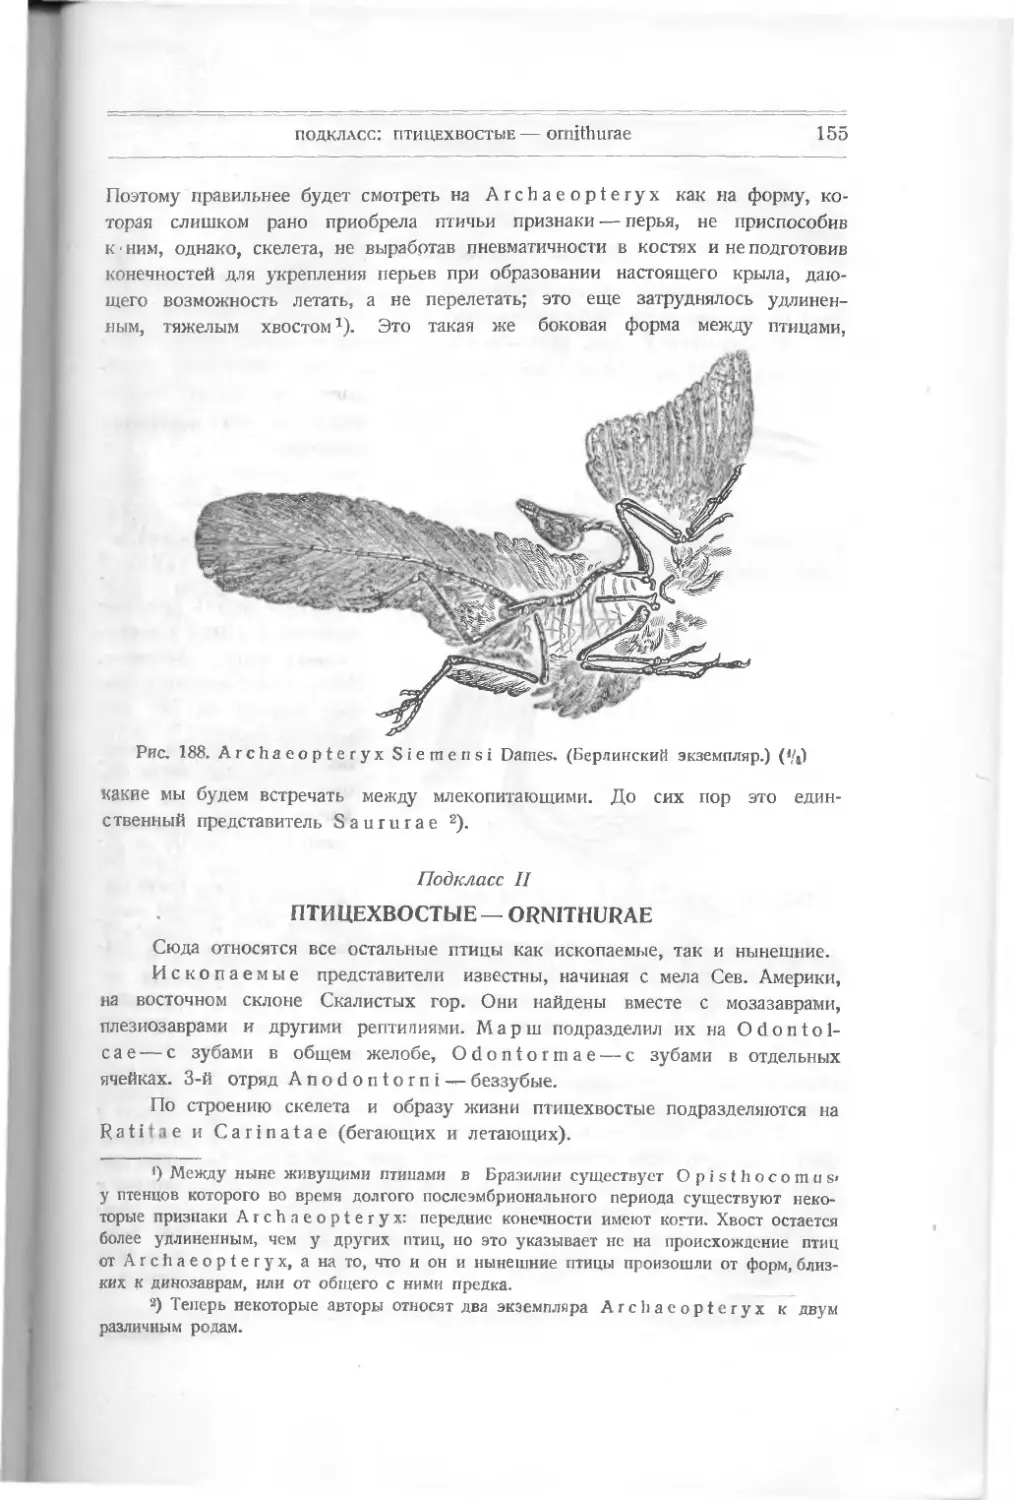 Подкласс II. Ornithurae